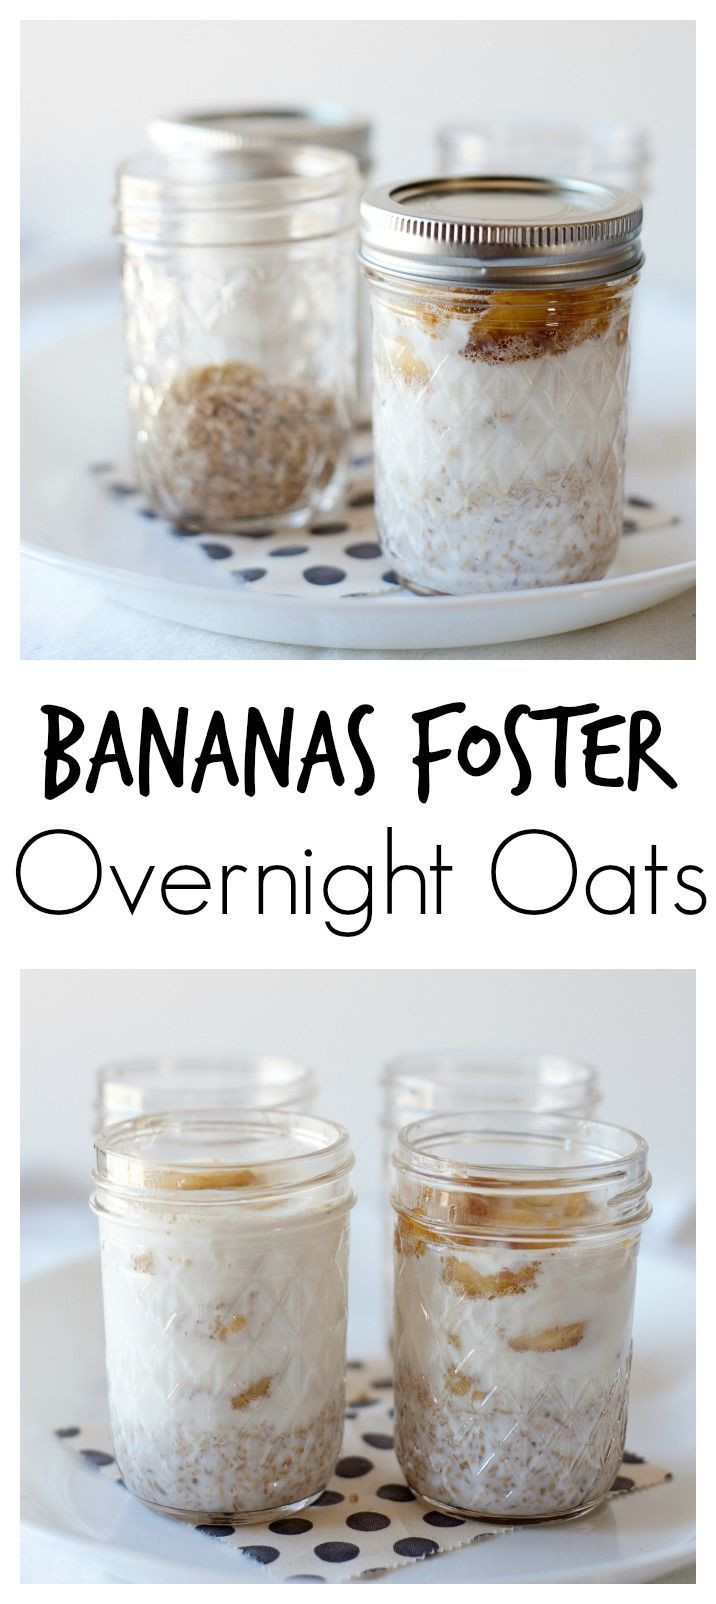 Overnight Oats Recipe Healthy
 Bananas Foster Overnight Oats Recipe